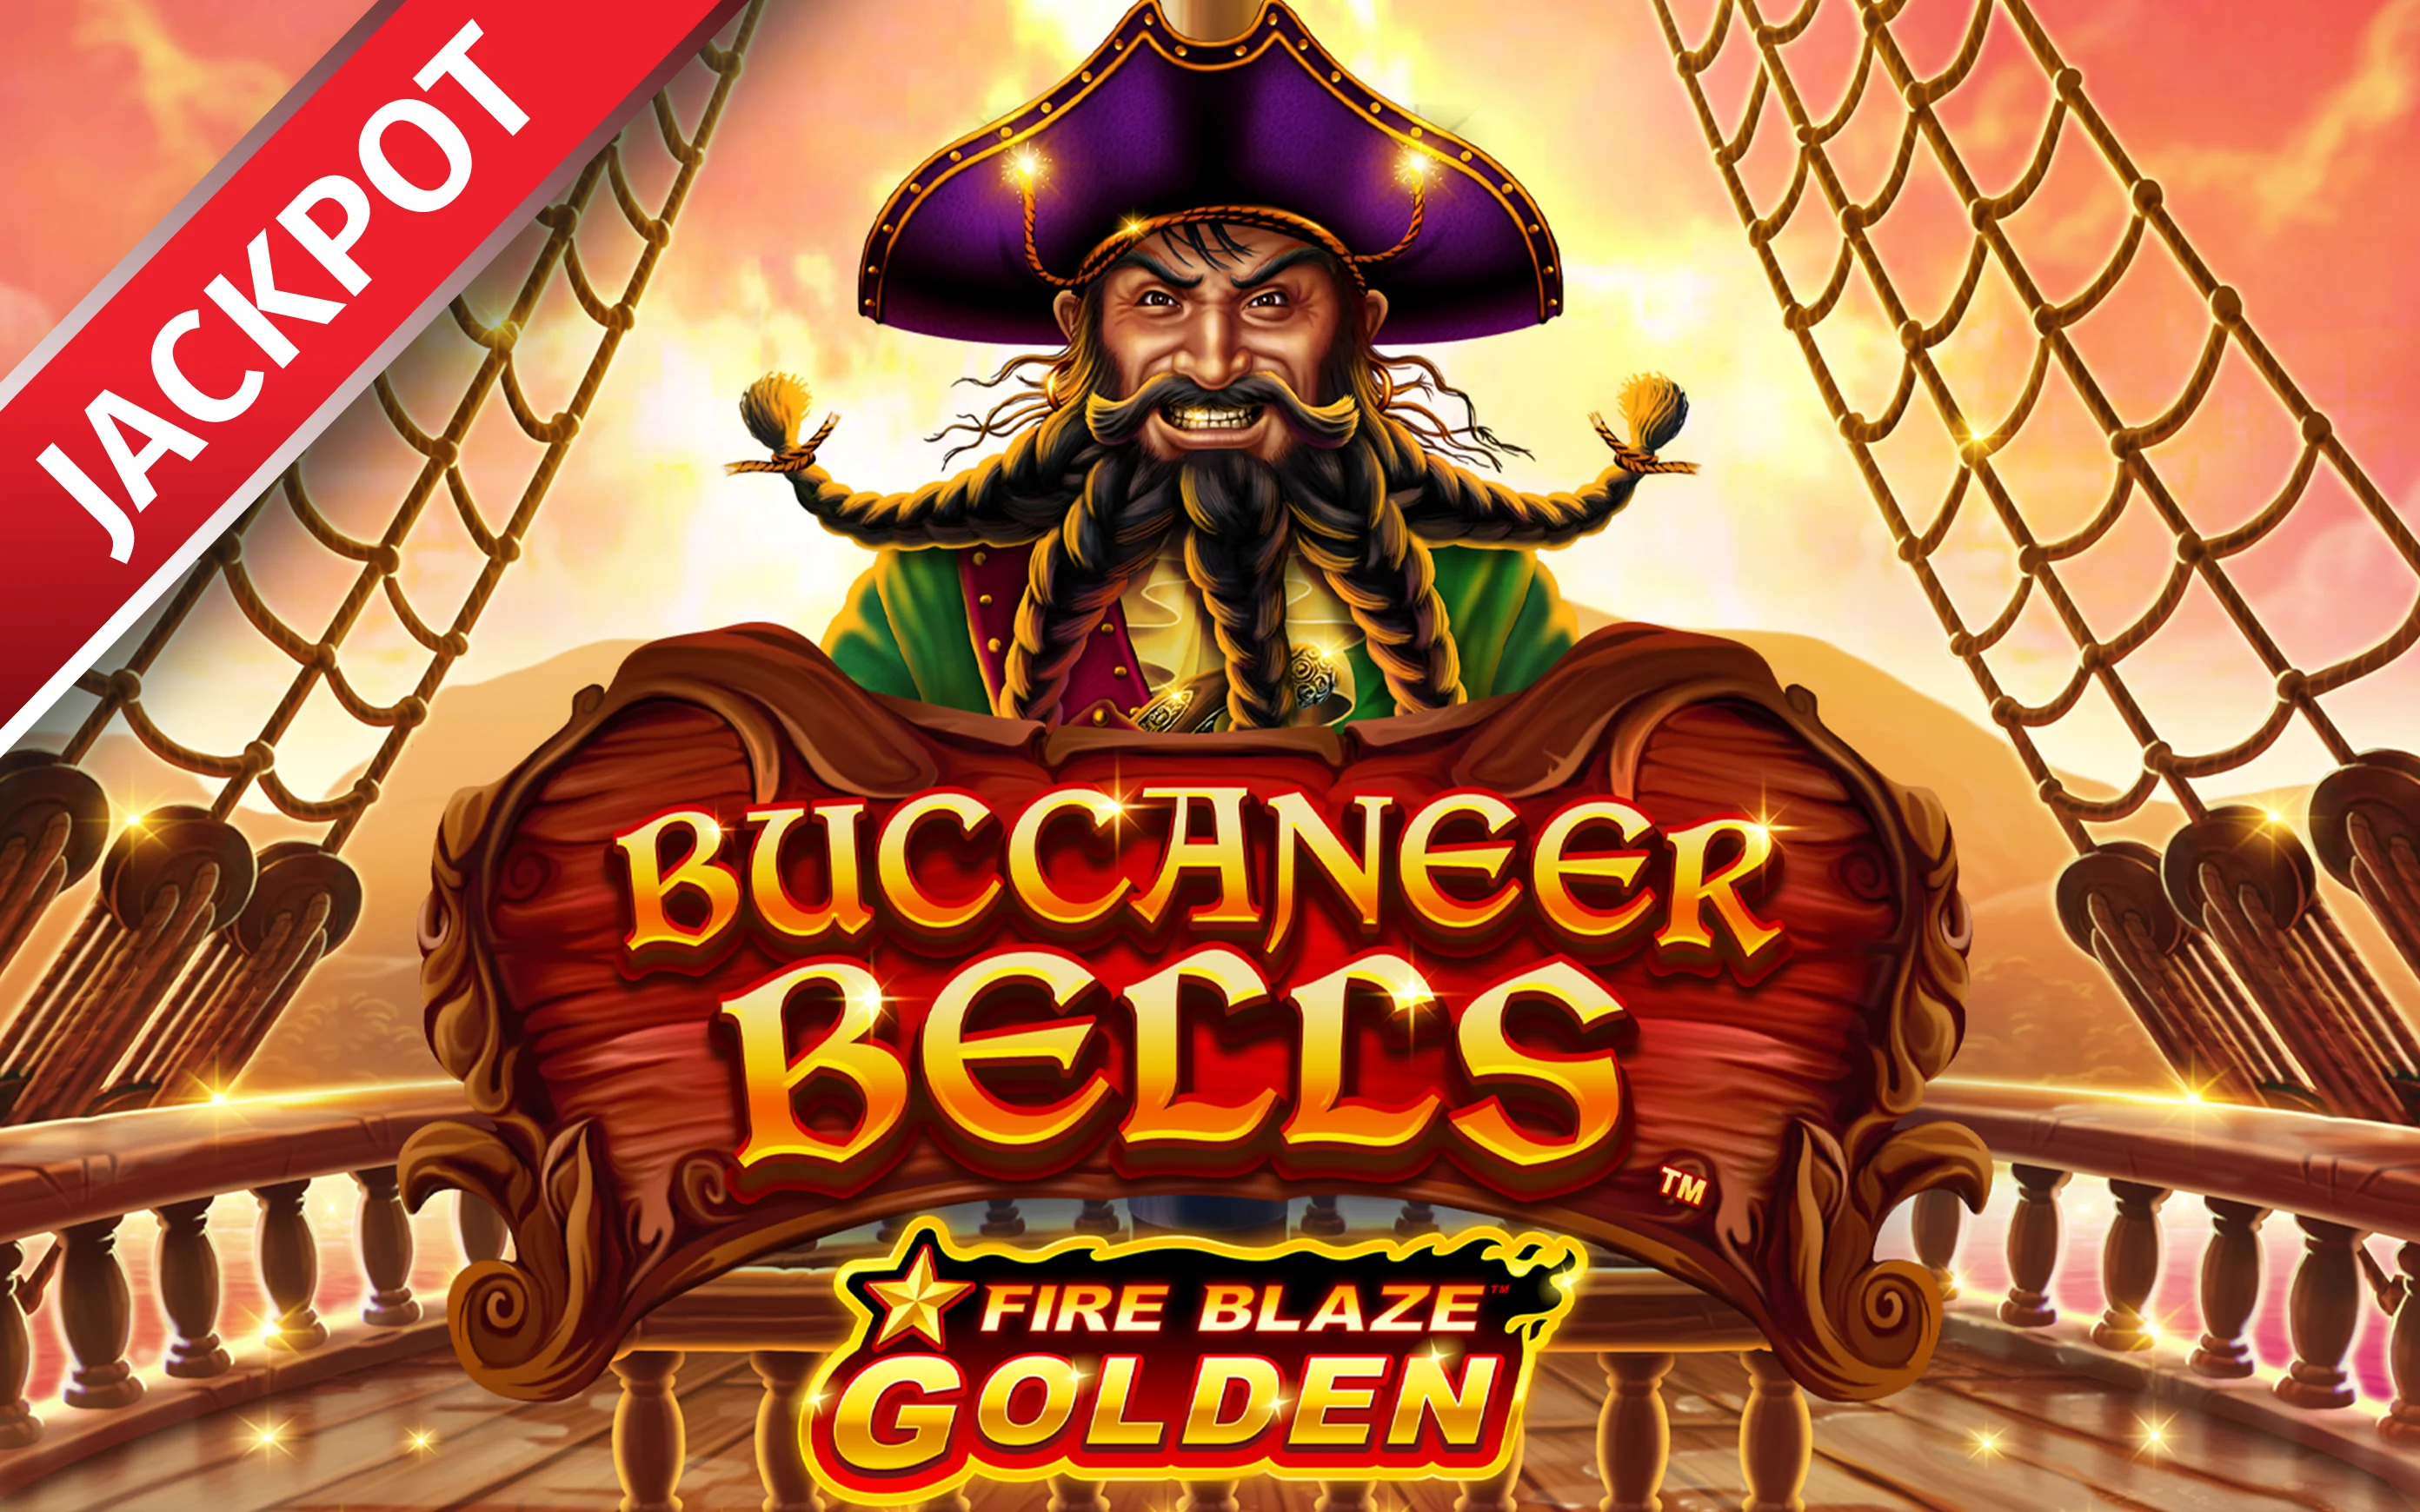 Spil Fire Blaze Golden Buccaneer Bells på Starcasino.be online kasino
